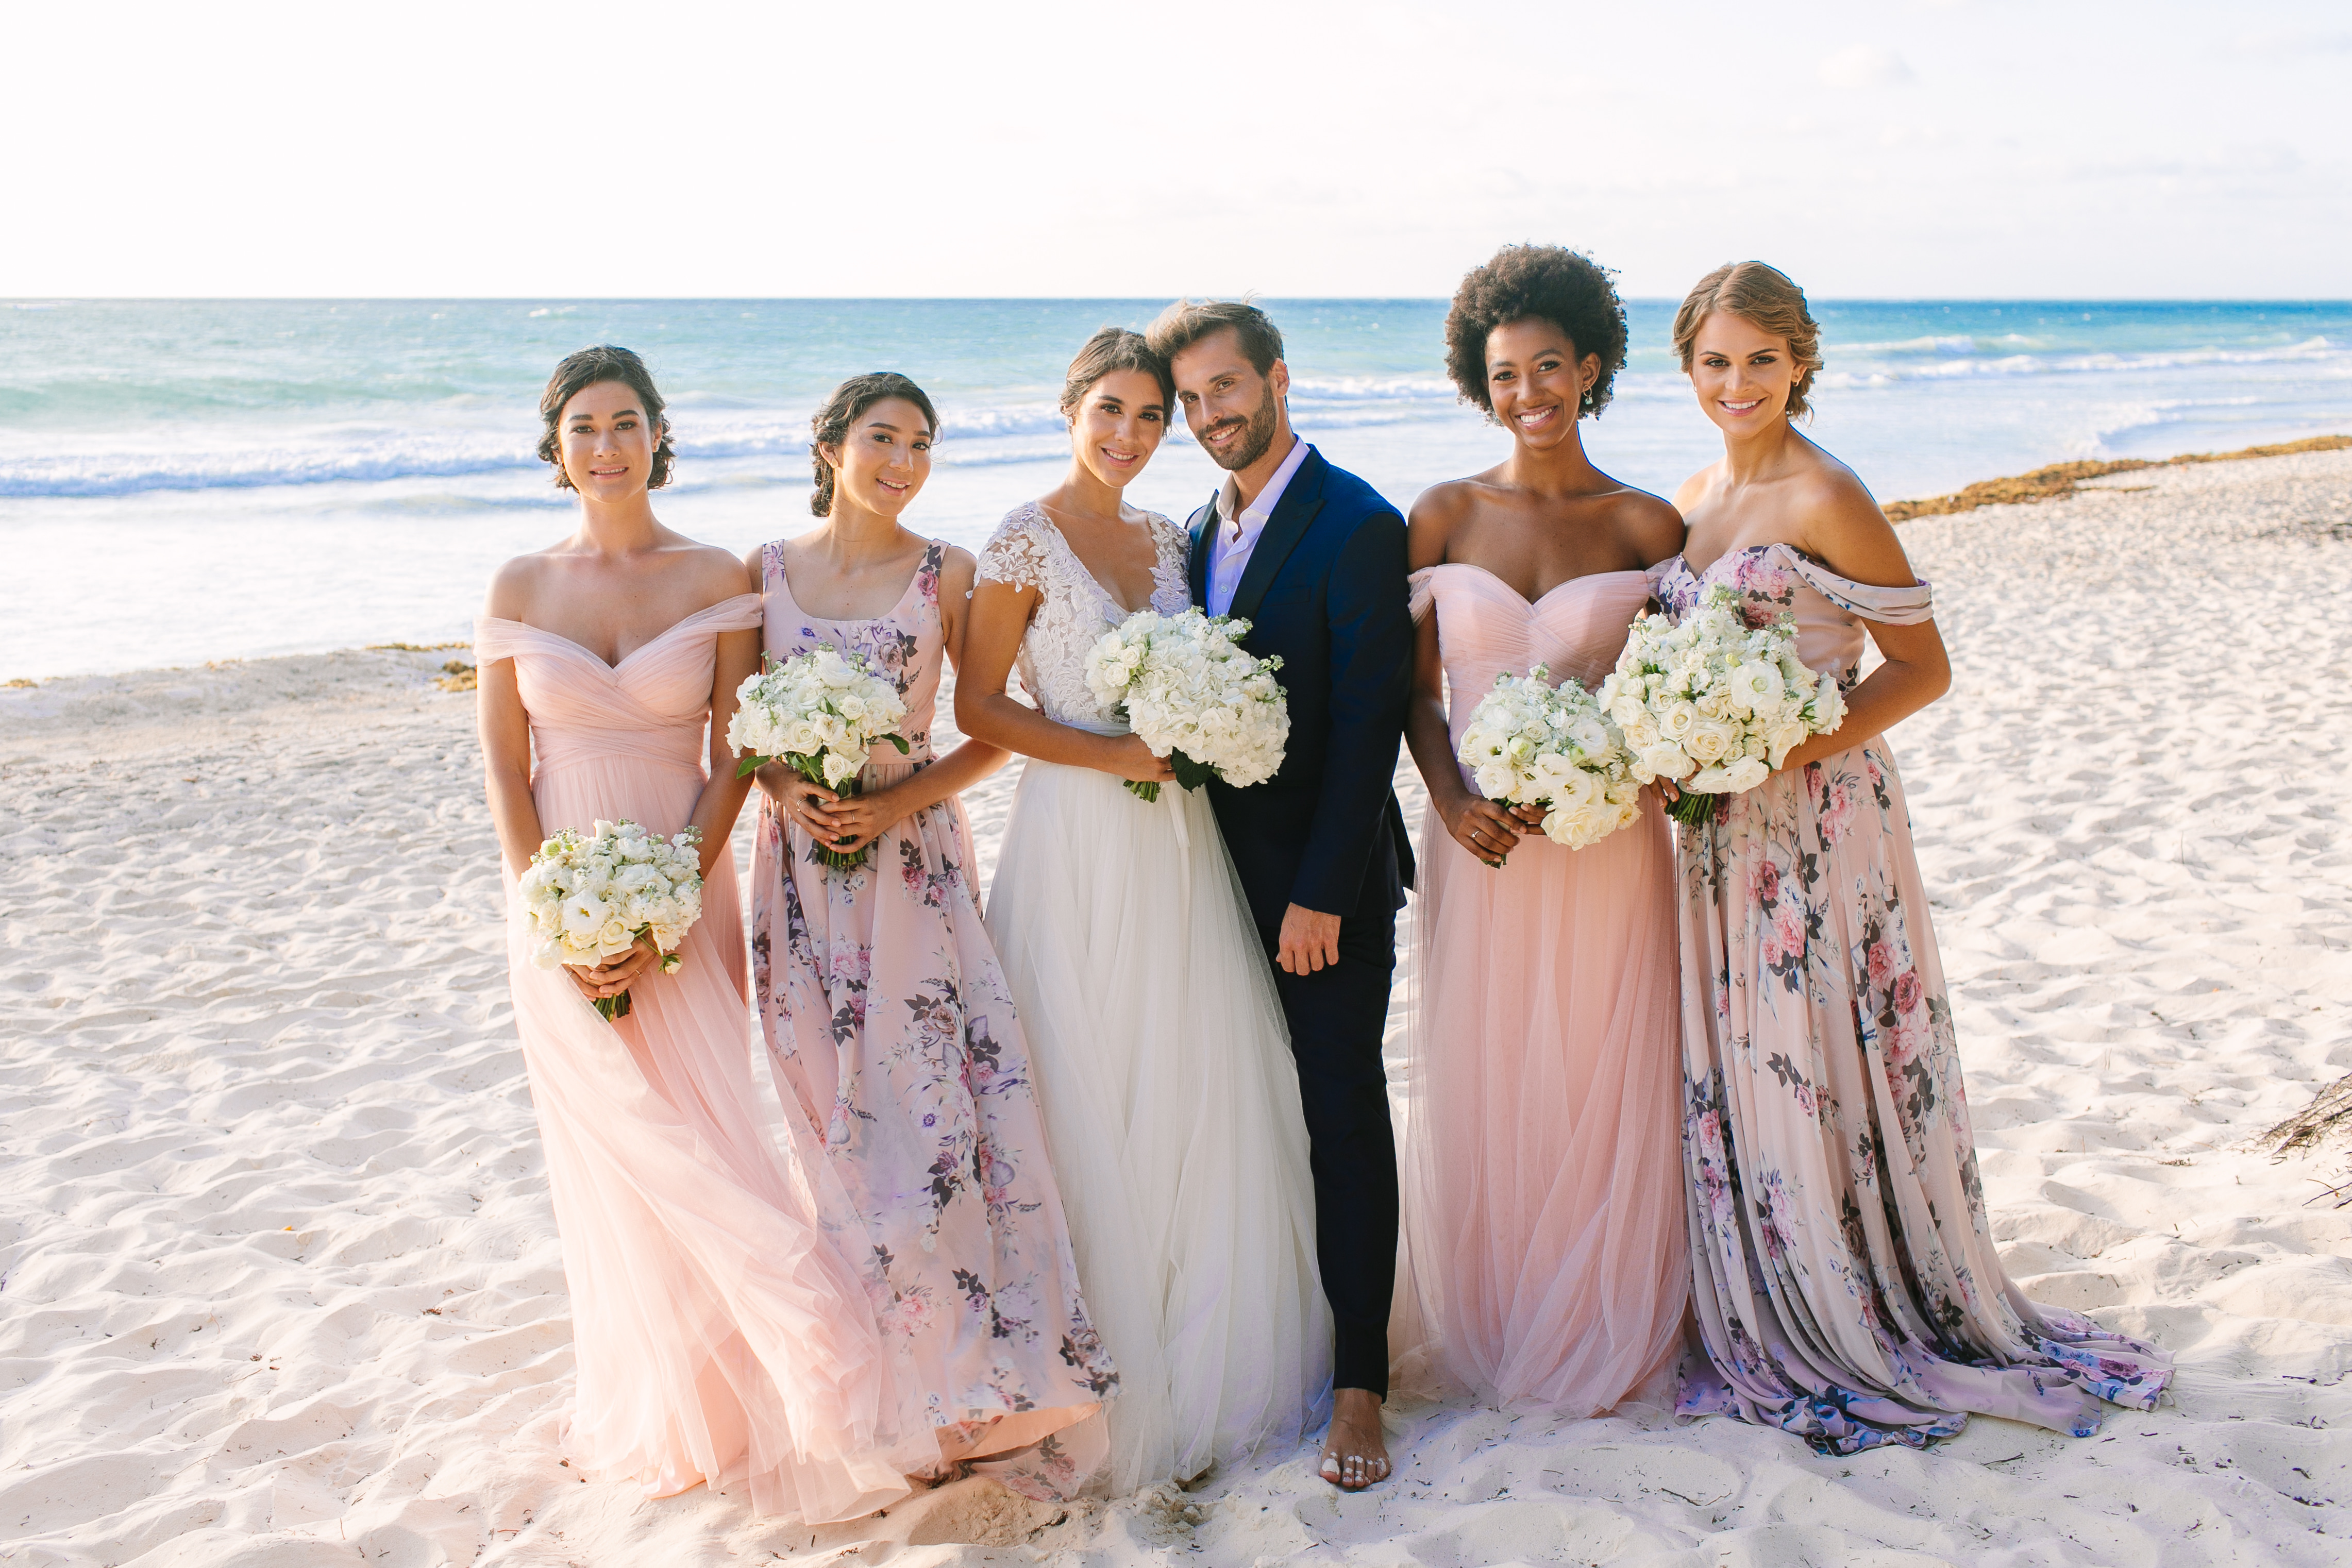 beach themed bridesmaid dresses